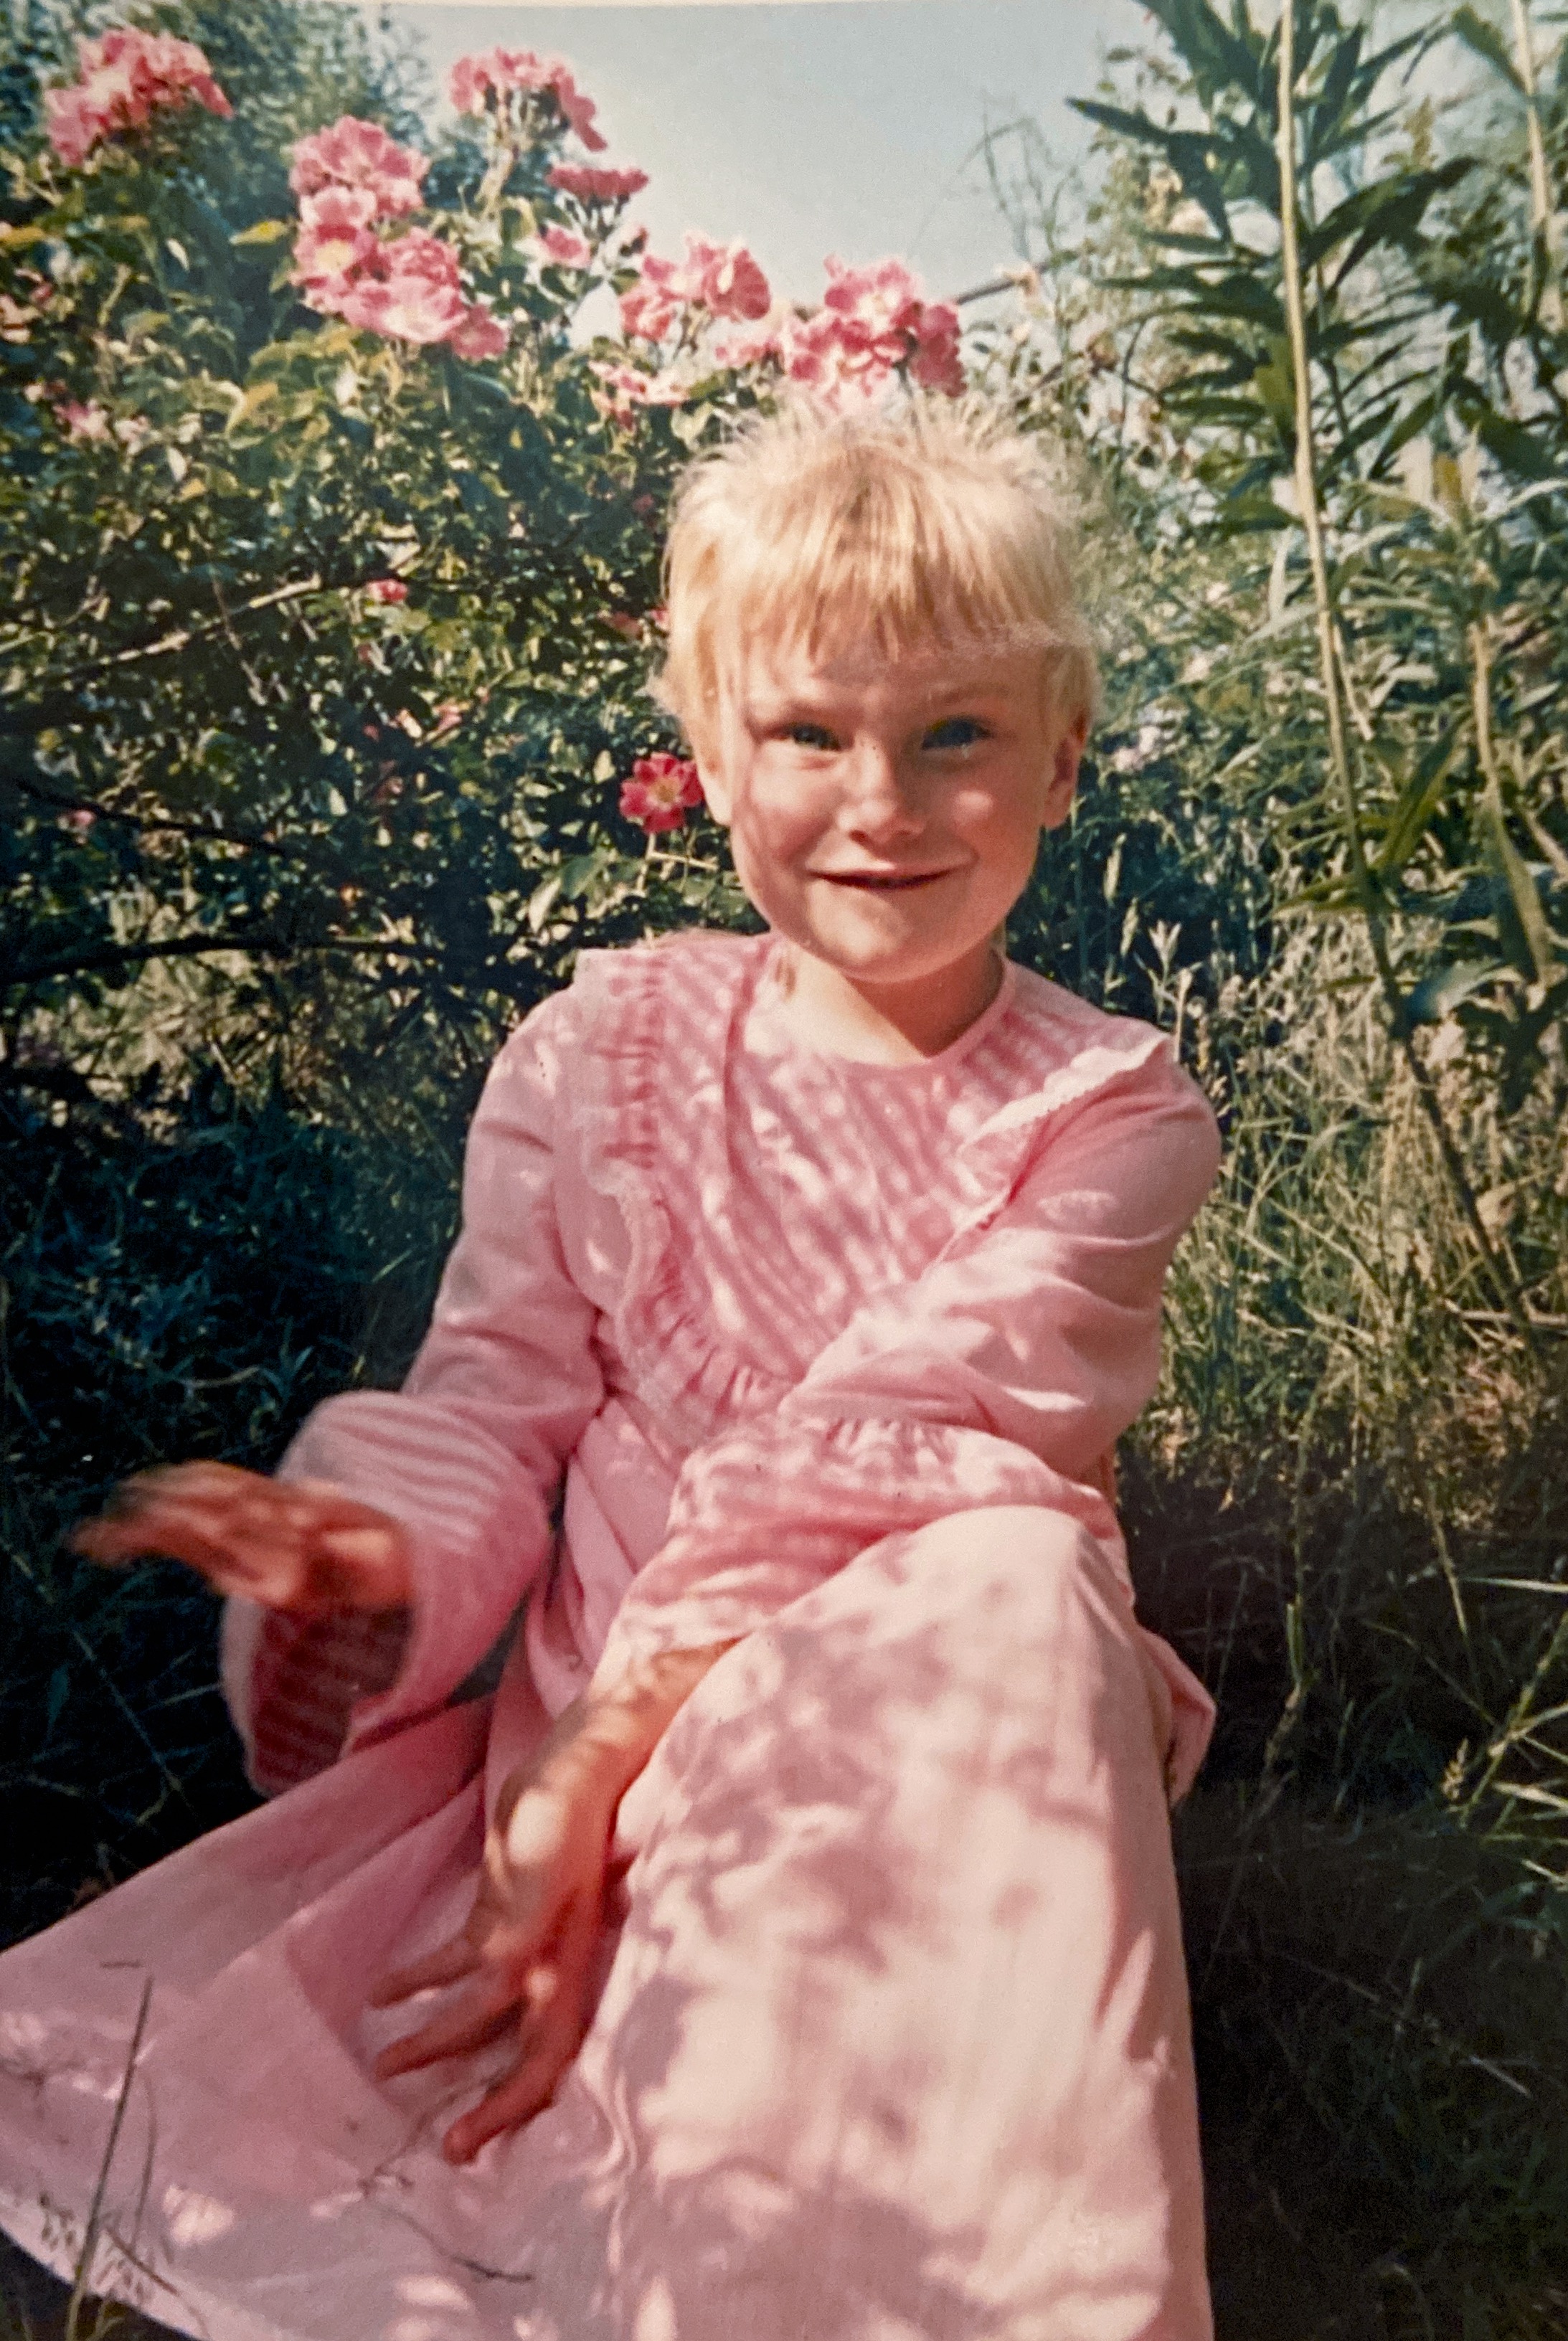 Me 6th birthday - Surrey, England. 1973